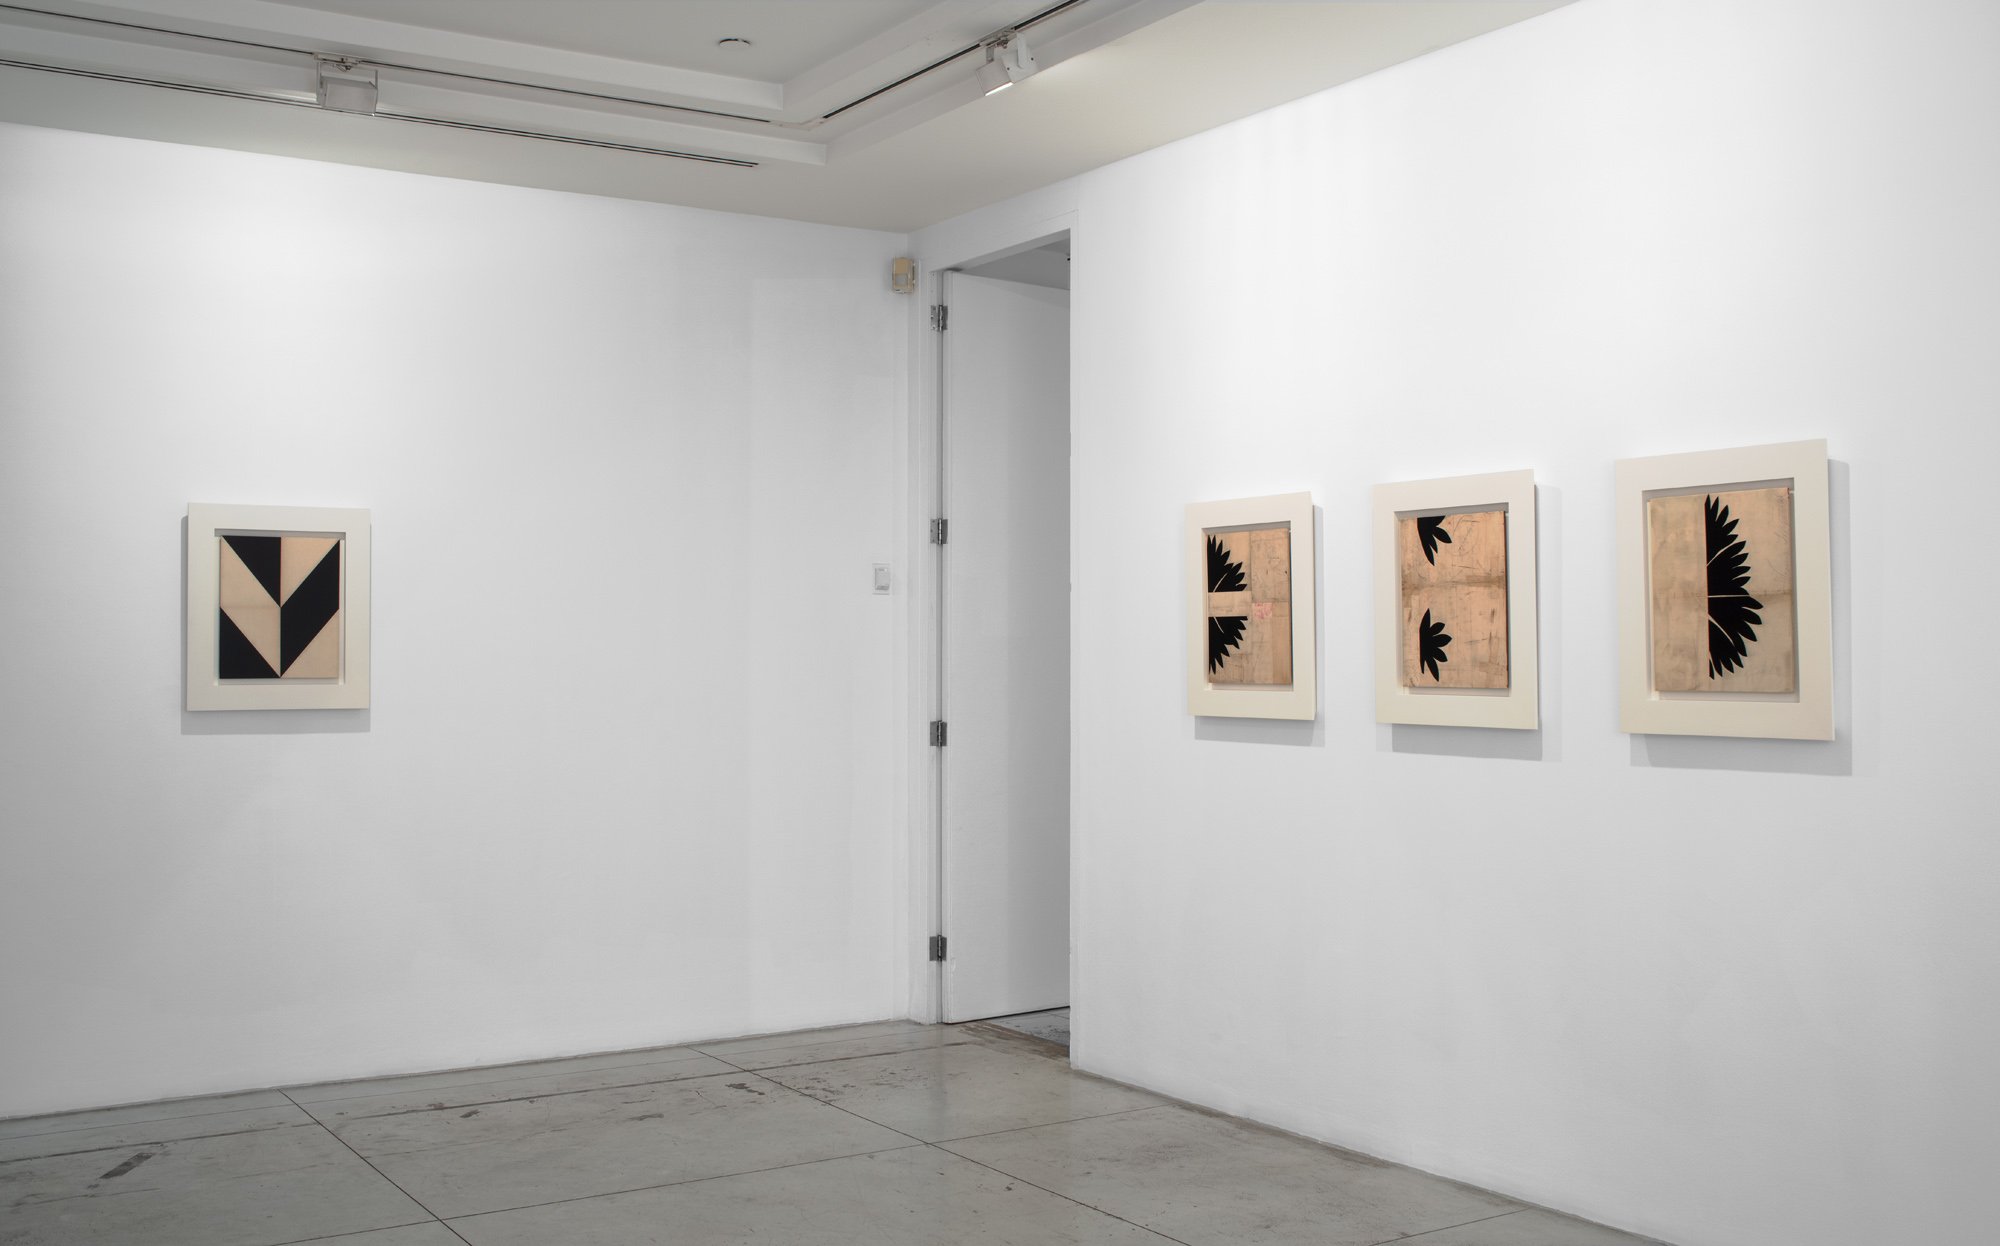   Robert Kelly: Venus Imperial , Installation view at Jason McCoy Gallery, 2019 